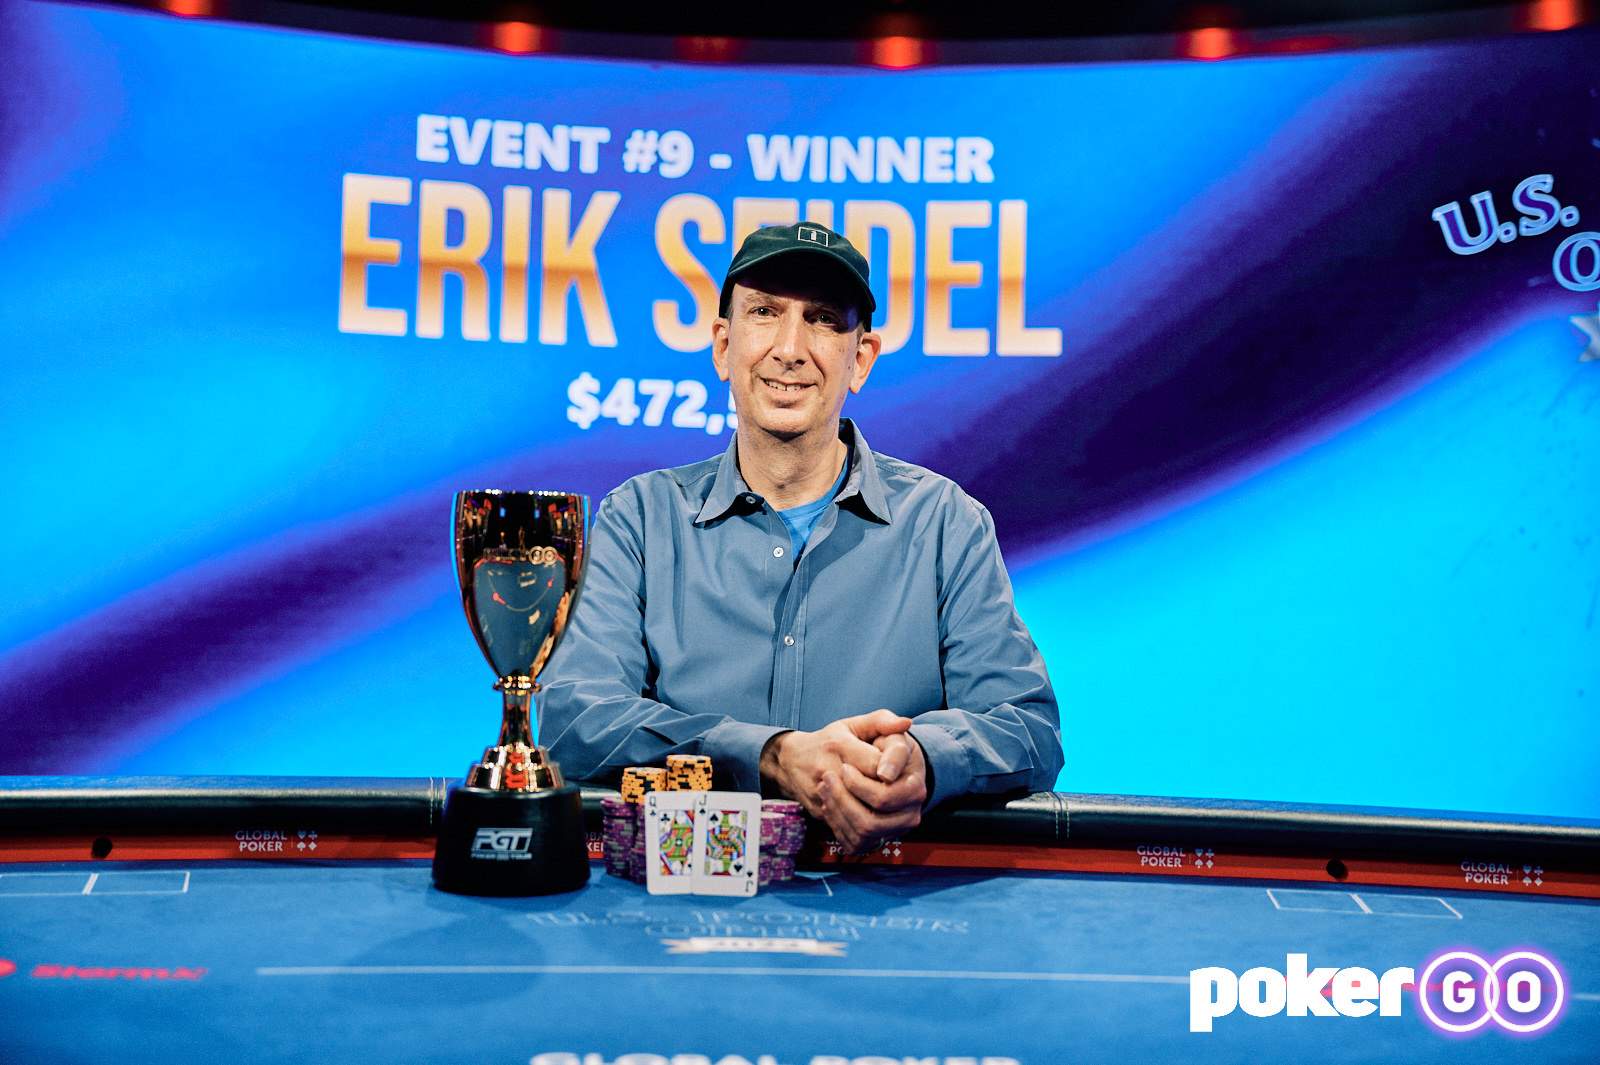 Erik Seidel Wins U.S. Poker Open Event #9 for $472,500